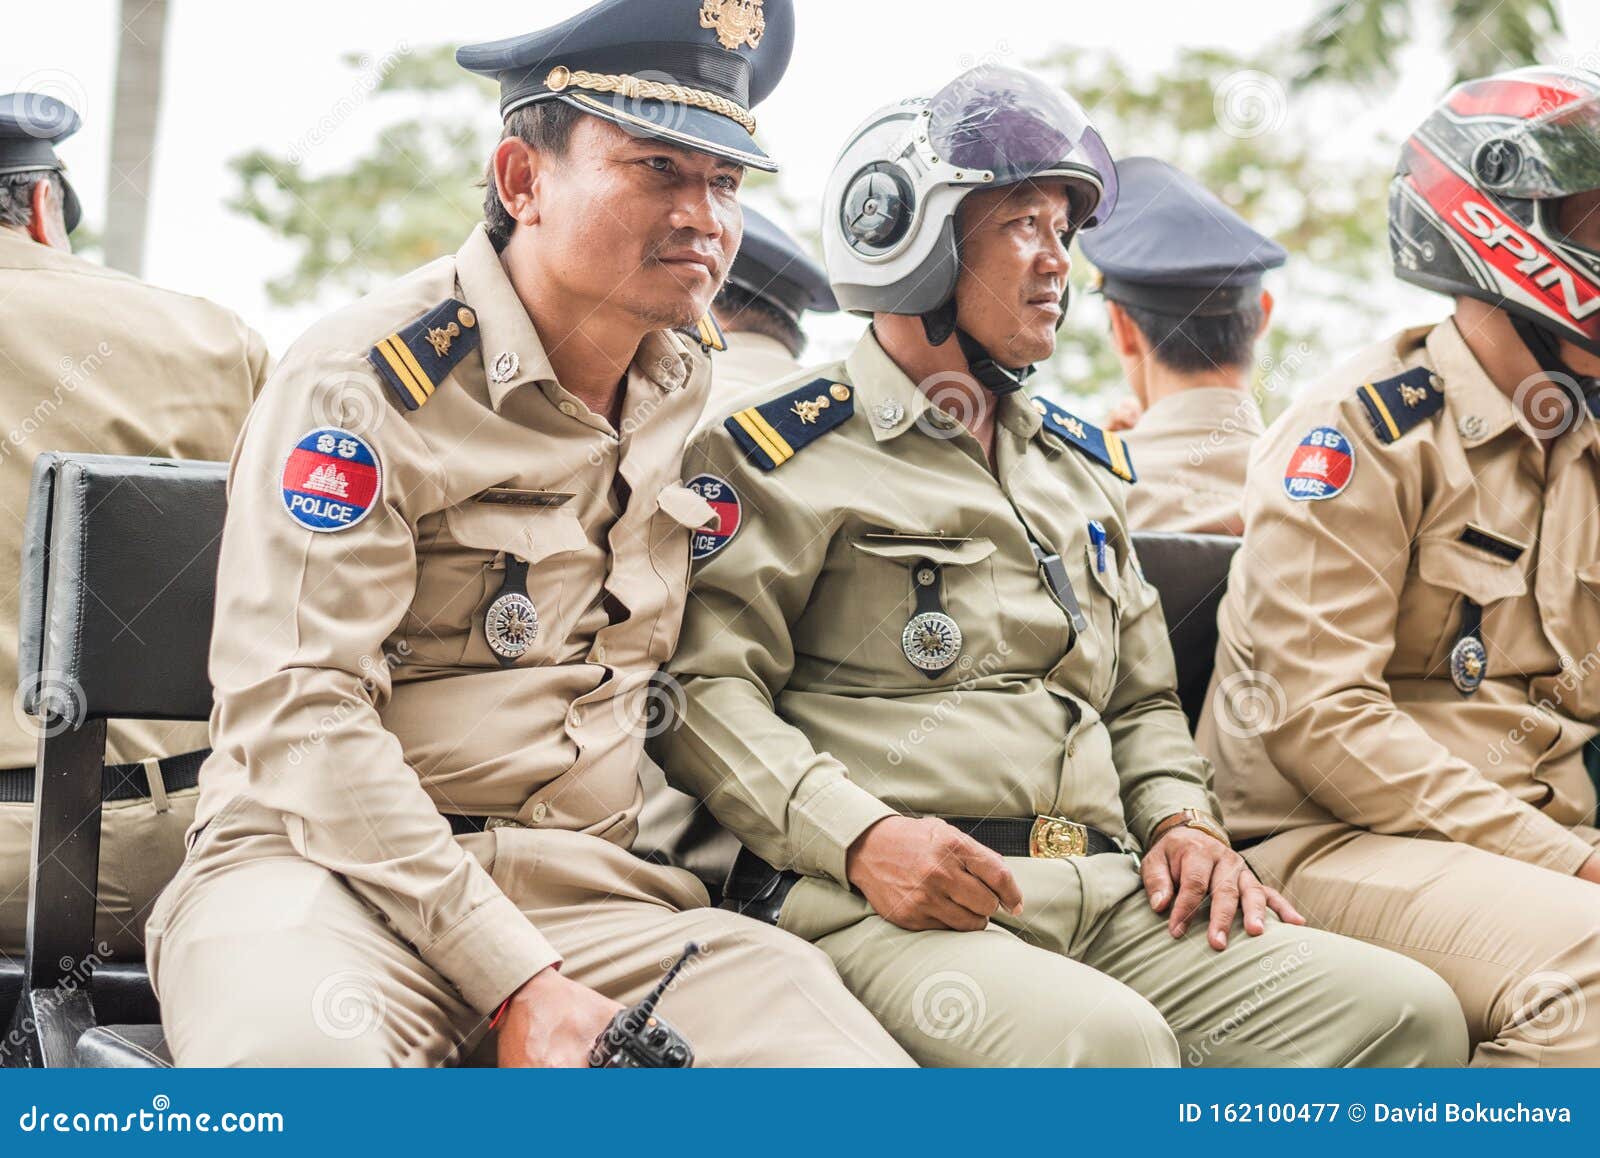 tourist police phnom penh